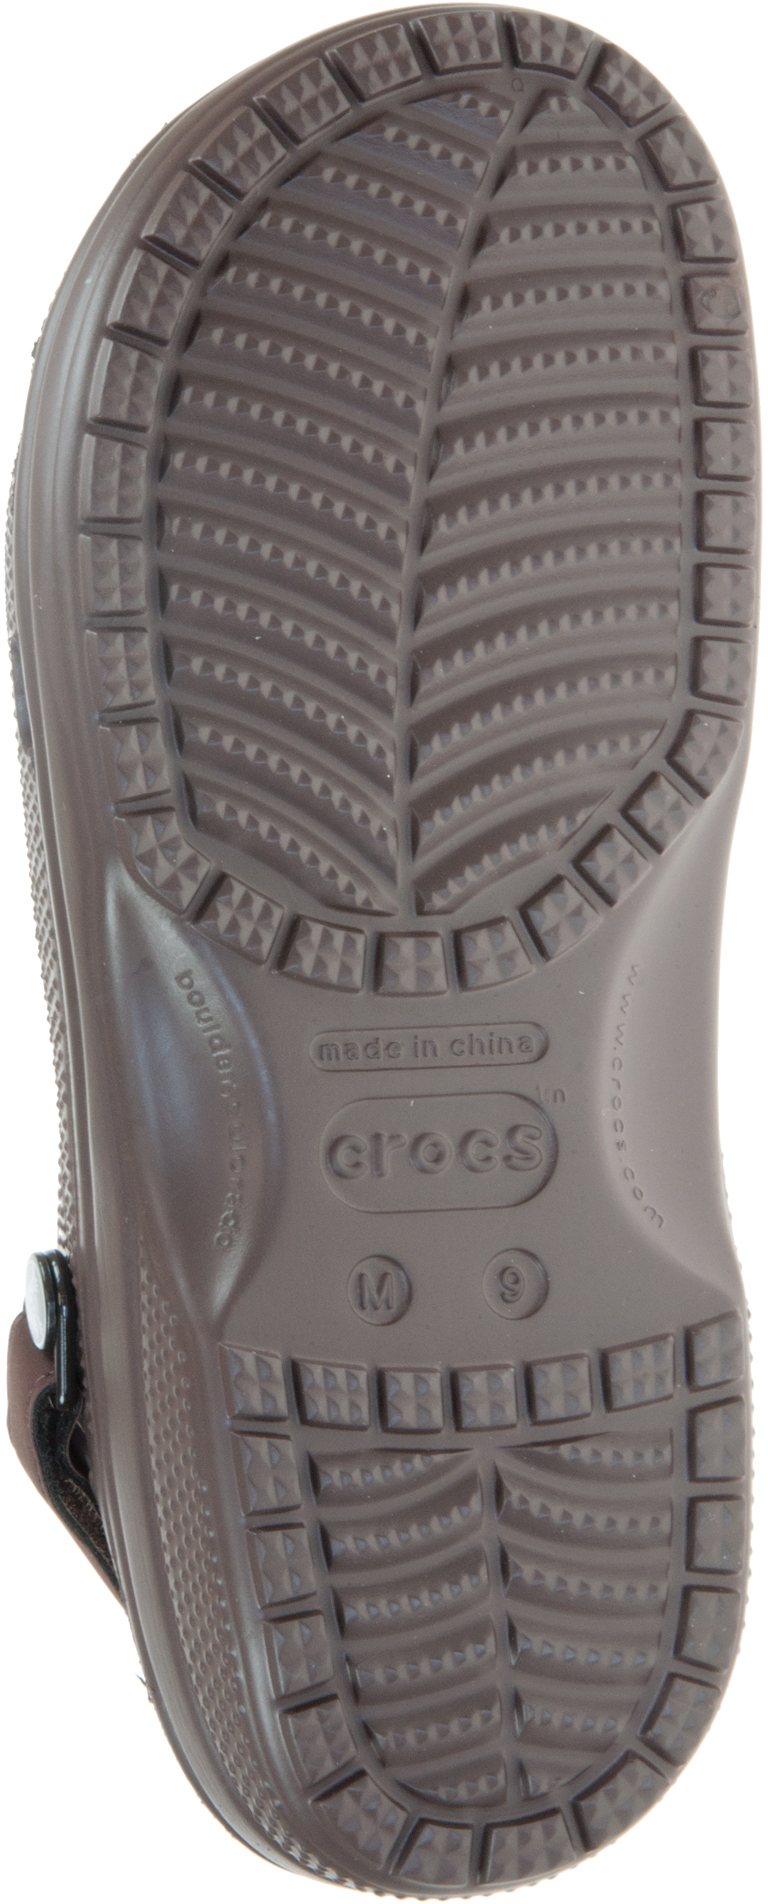 Crocs Yukon Vista II Clog Espresso 207142-206 - Full Sandals ...